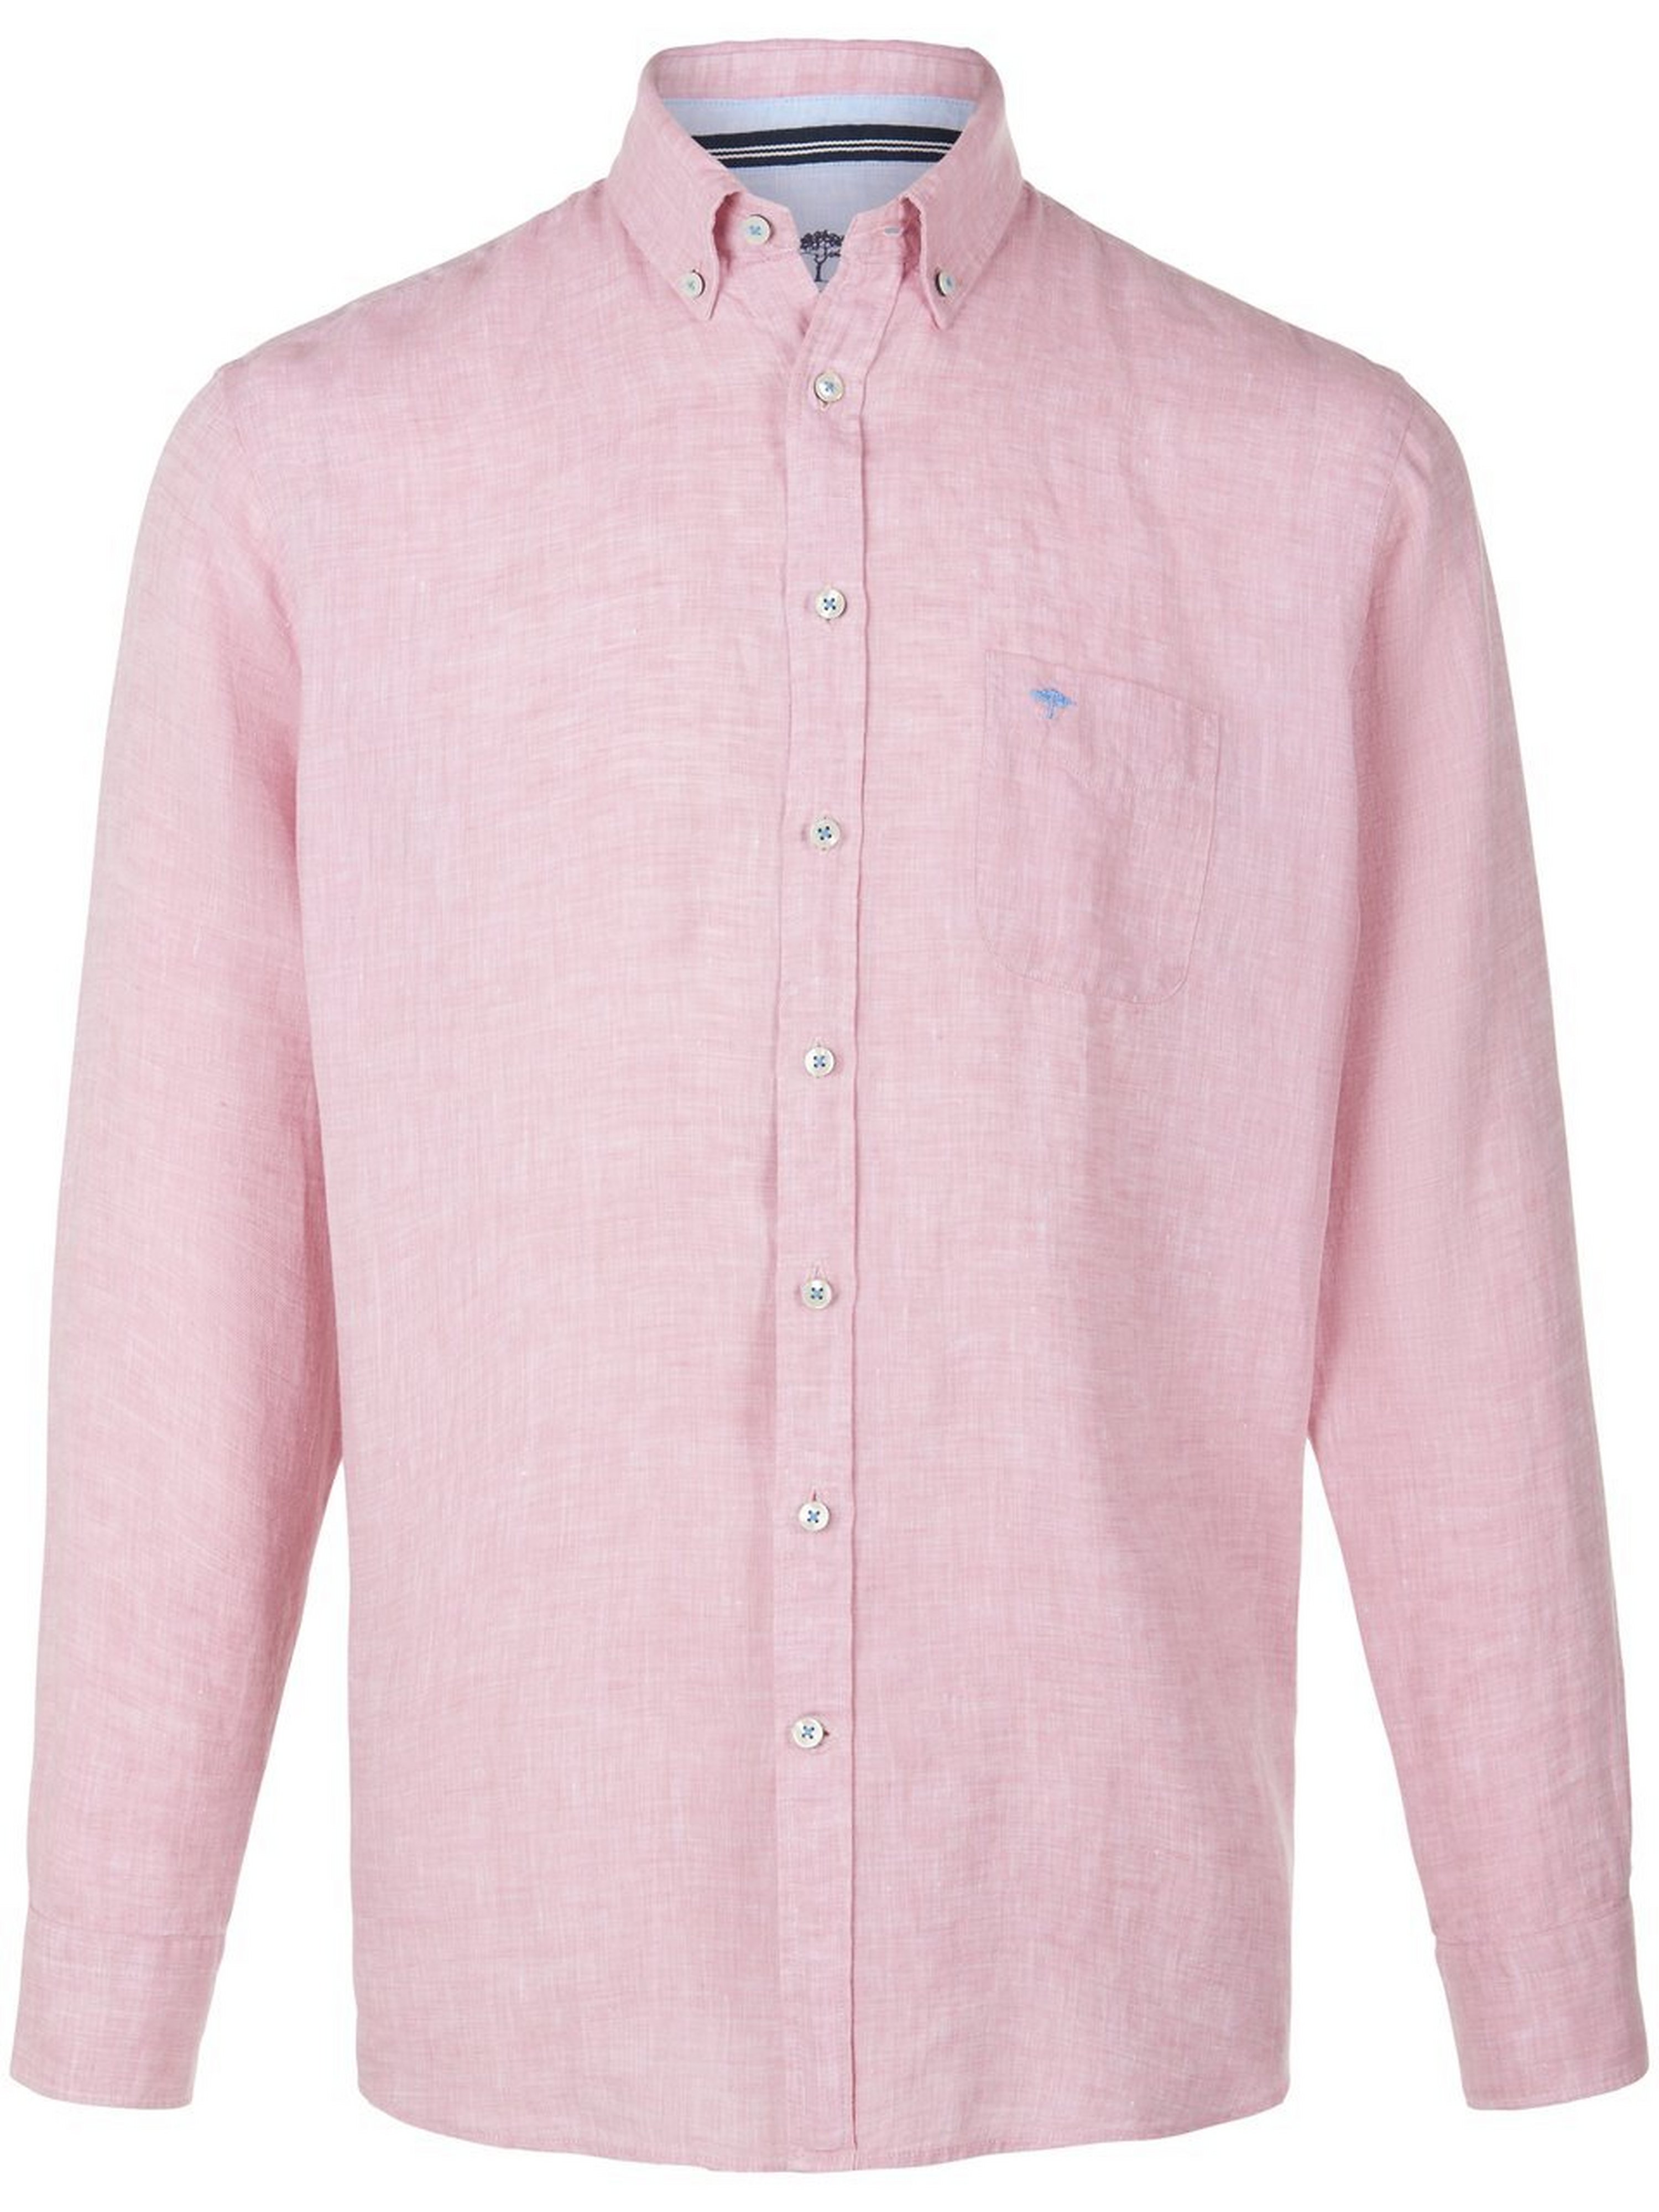 Overhemd Van Fynch Hatton roze